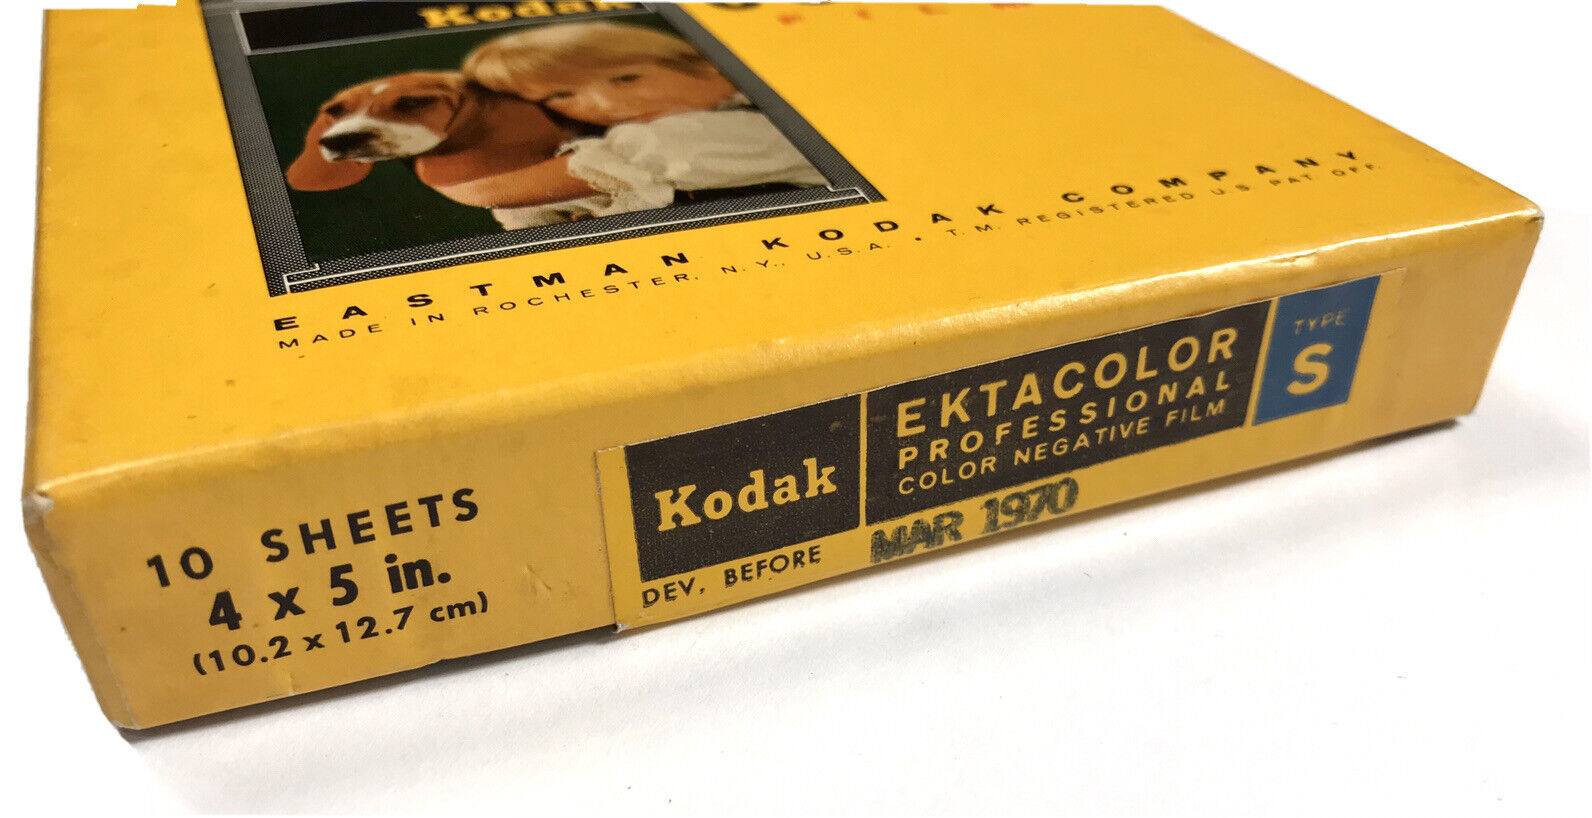 Kodak Ektacolor Type S Color Film 6101 4 X 5 in Exp 5/71 for sale 